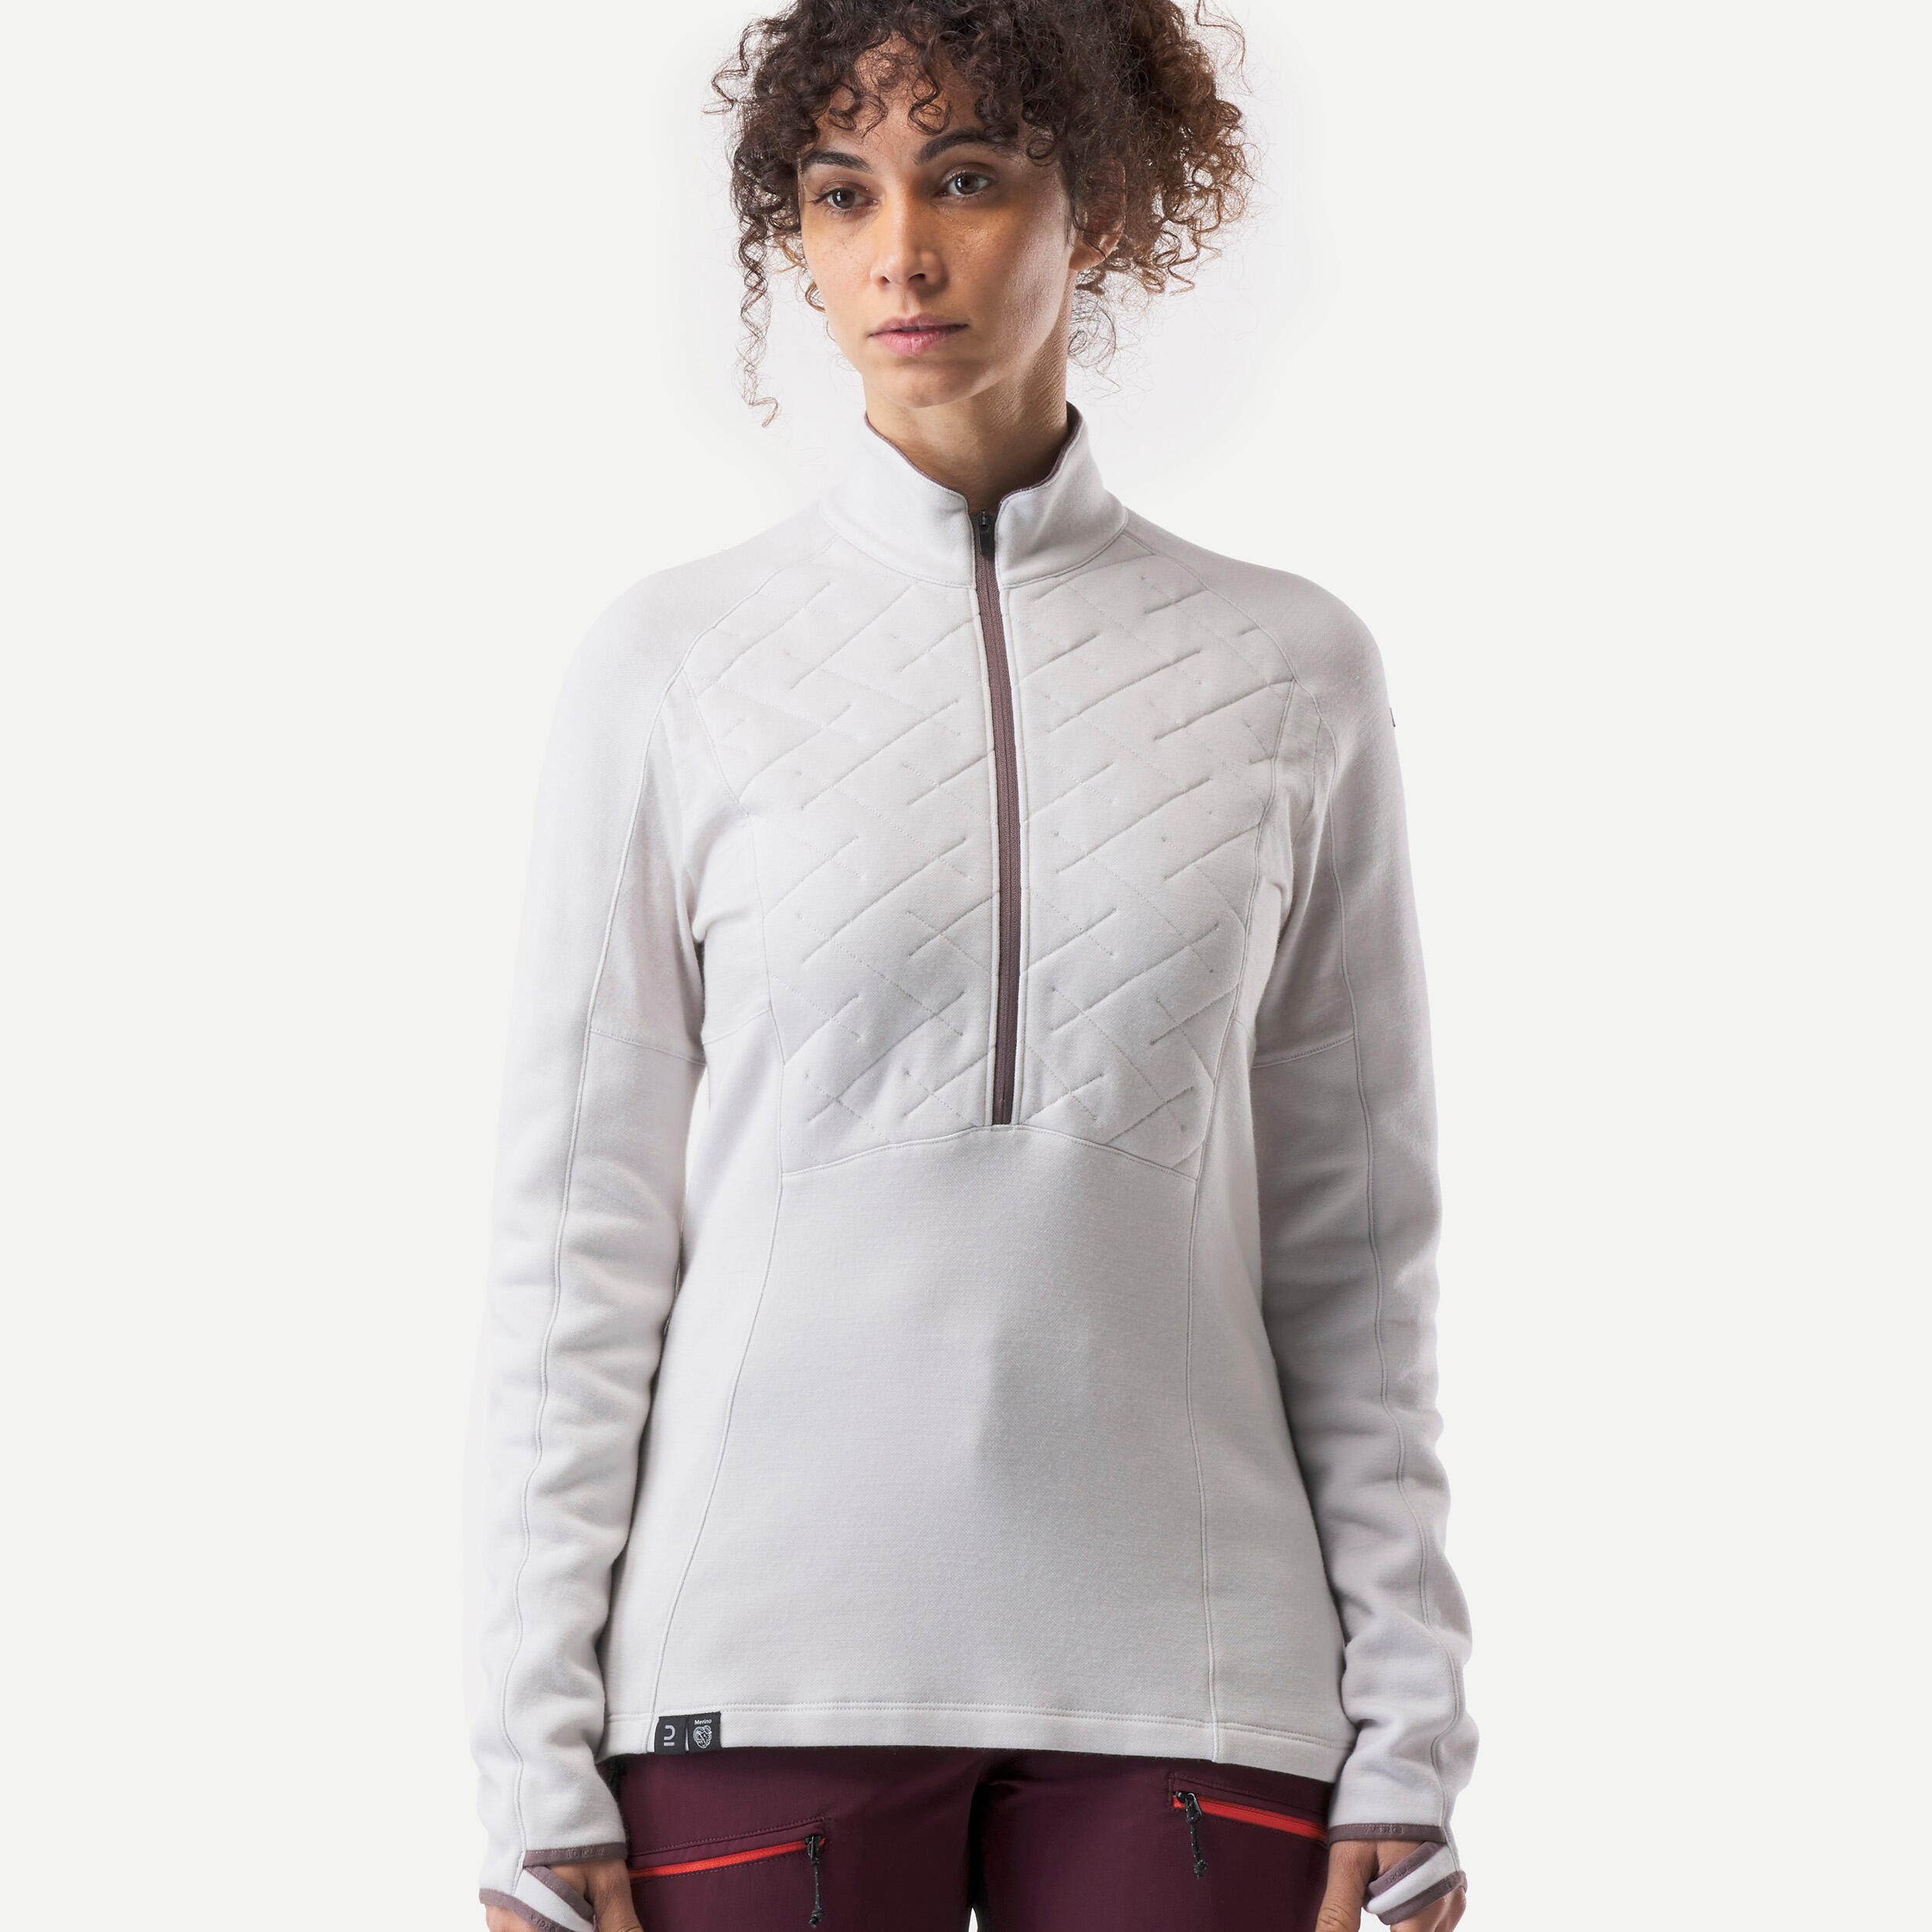 Women's Merino Wool Long-Sleeved Trekking T-Shirt - MT900 5/10